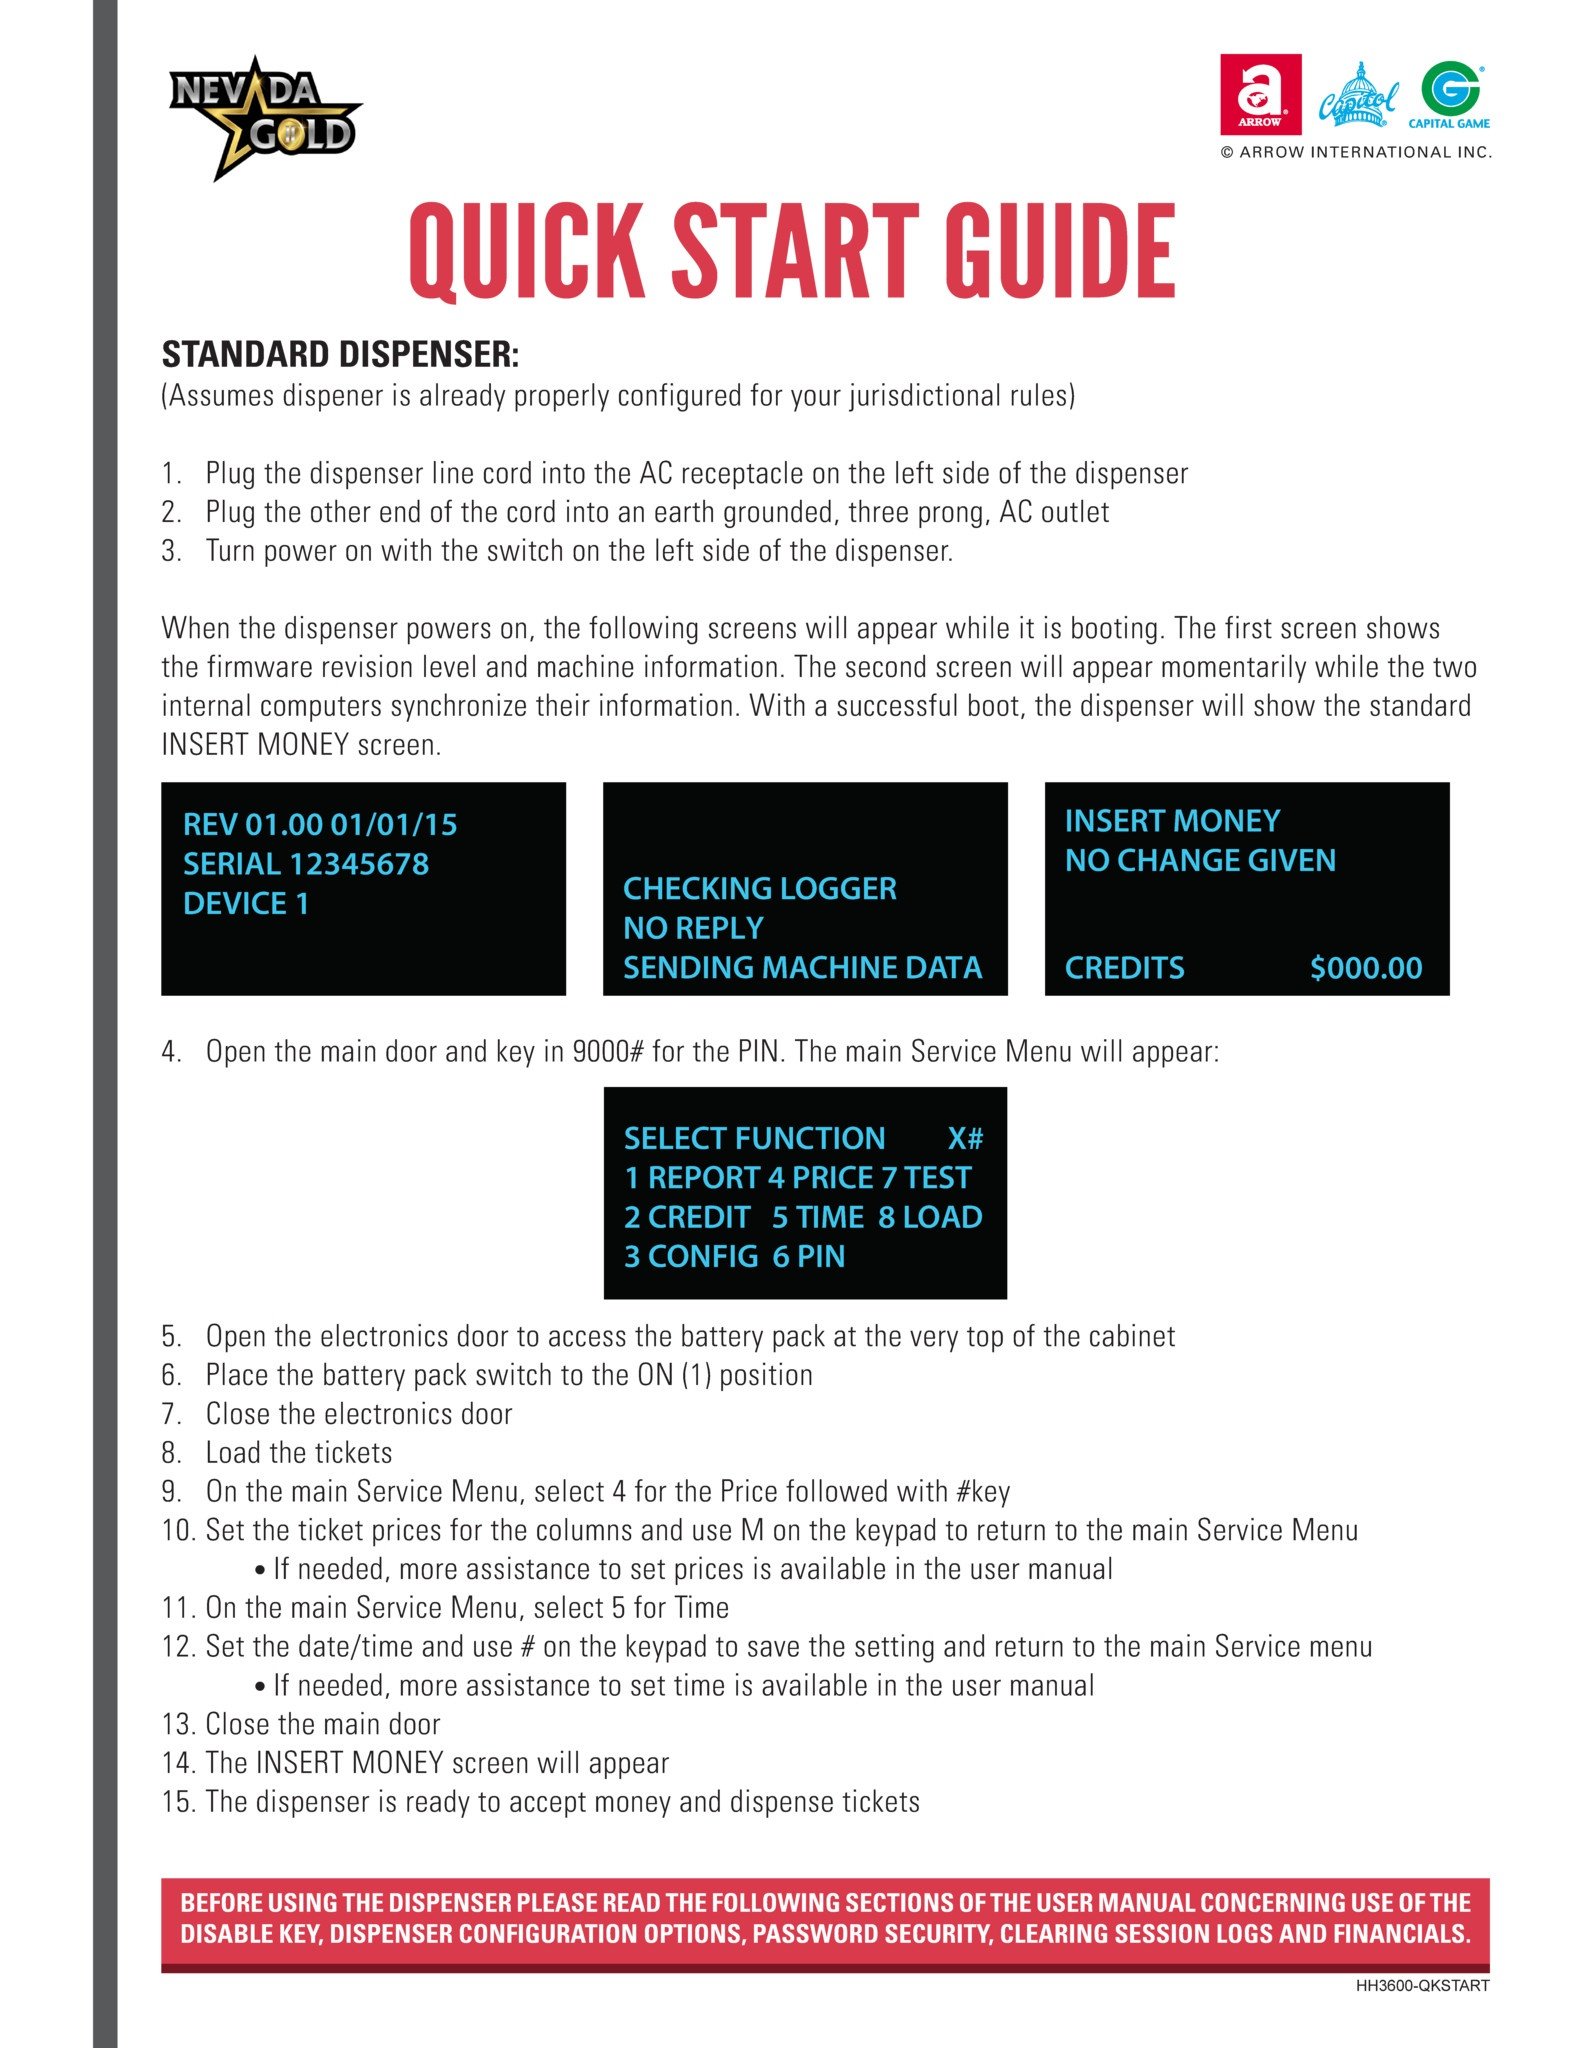 Nevada Gold II Quick Start Guide Equipment Manuals/Quick Start Guides